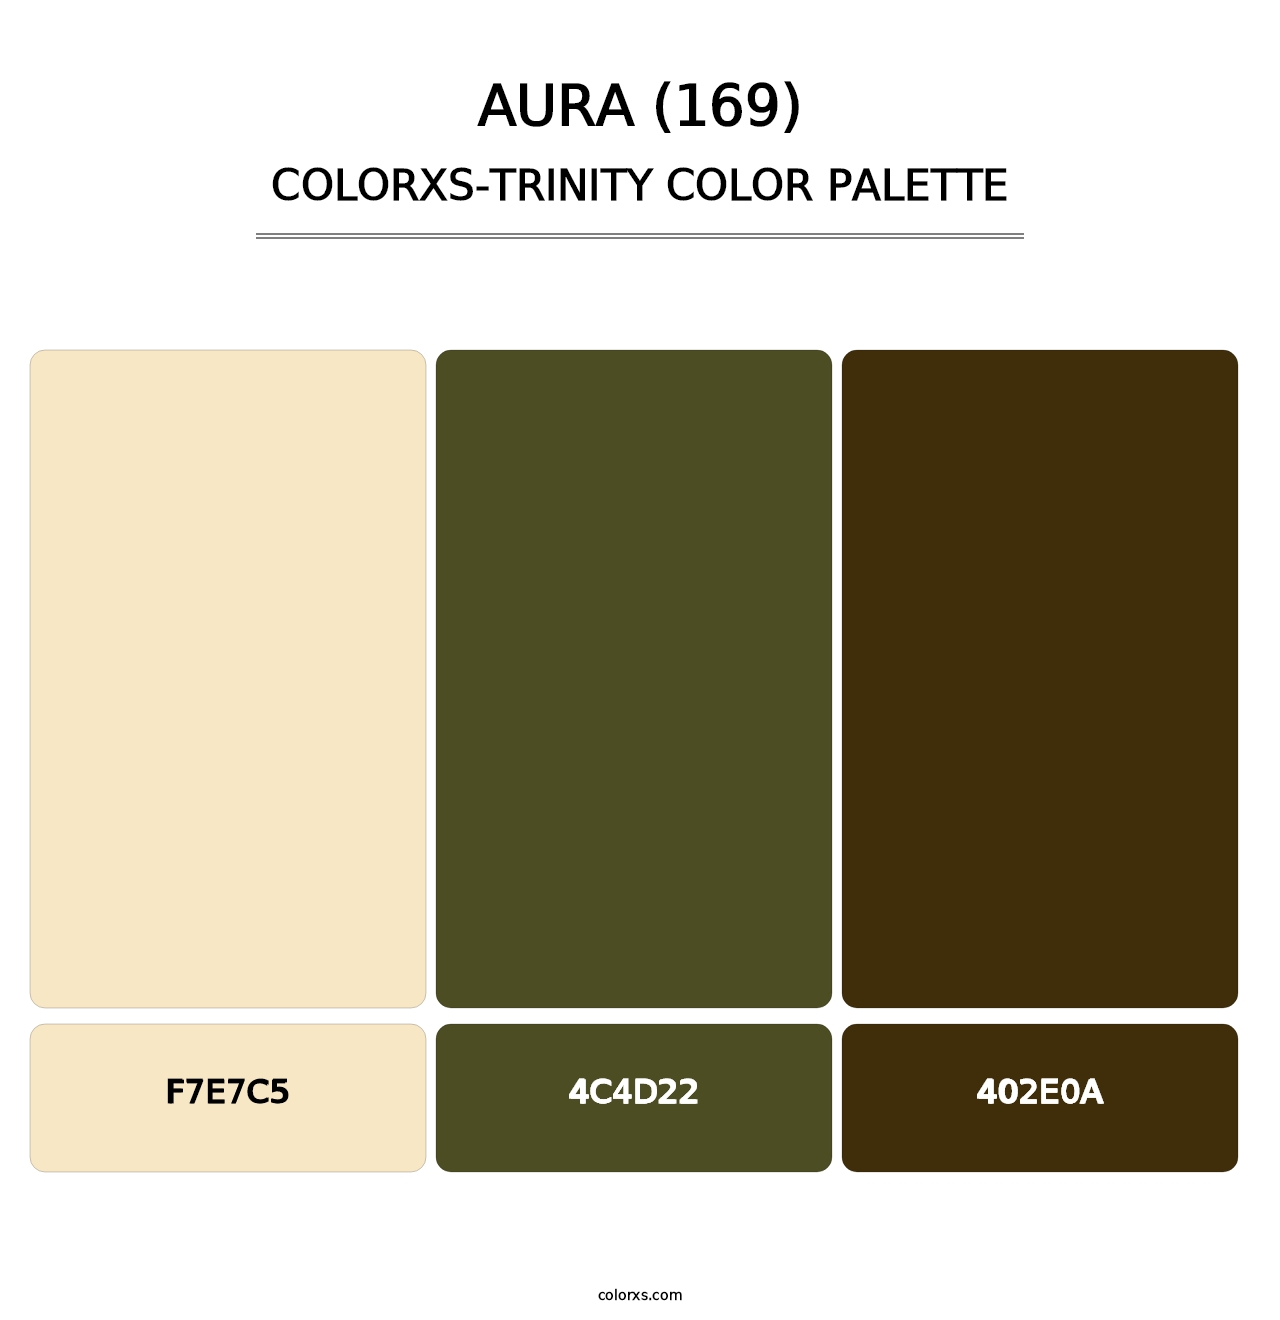 Aura (169) - Colorxs Trinity Palette